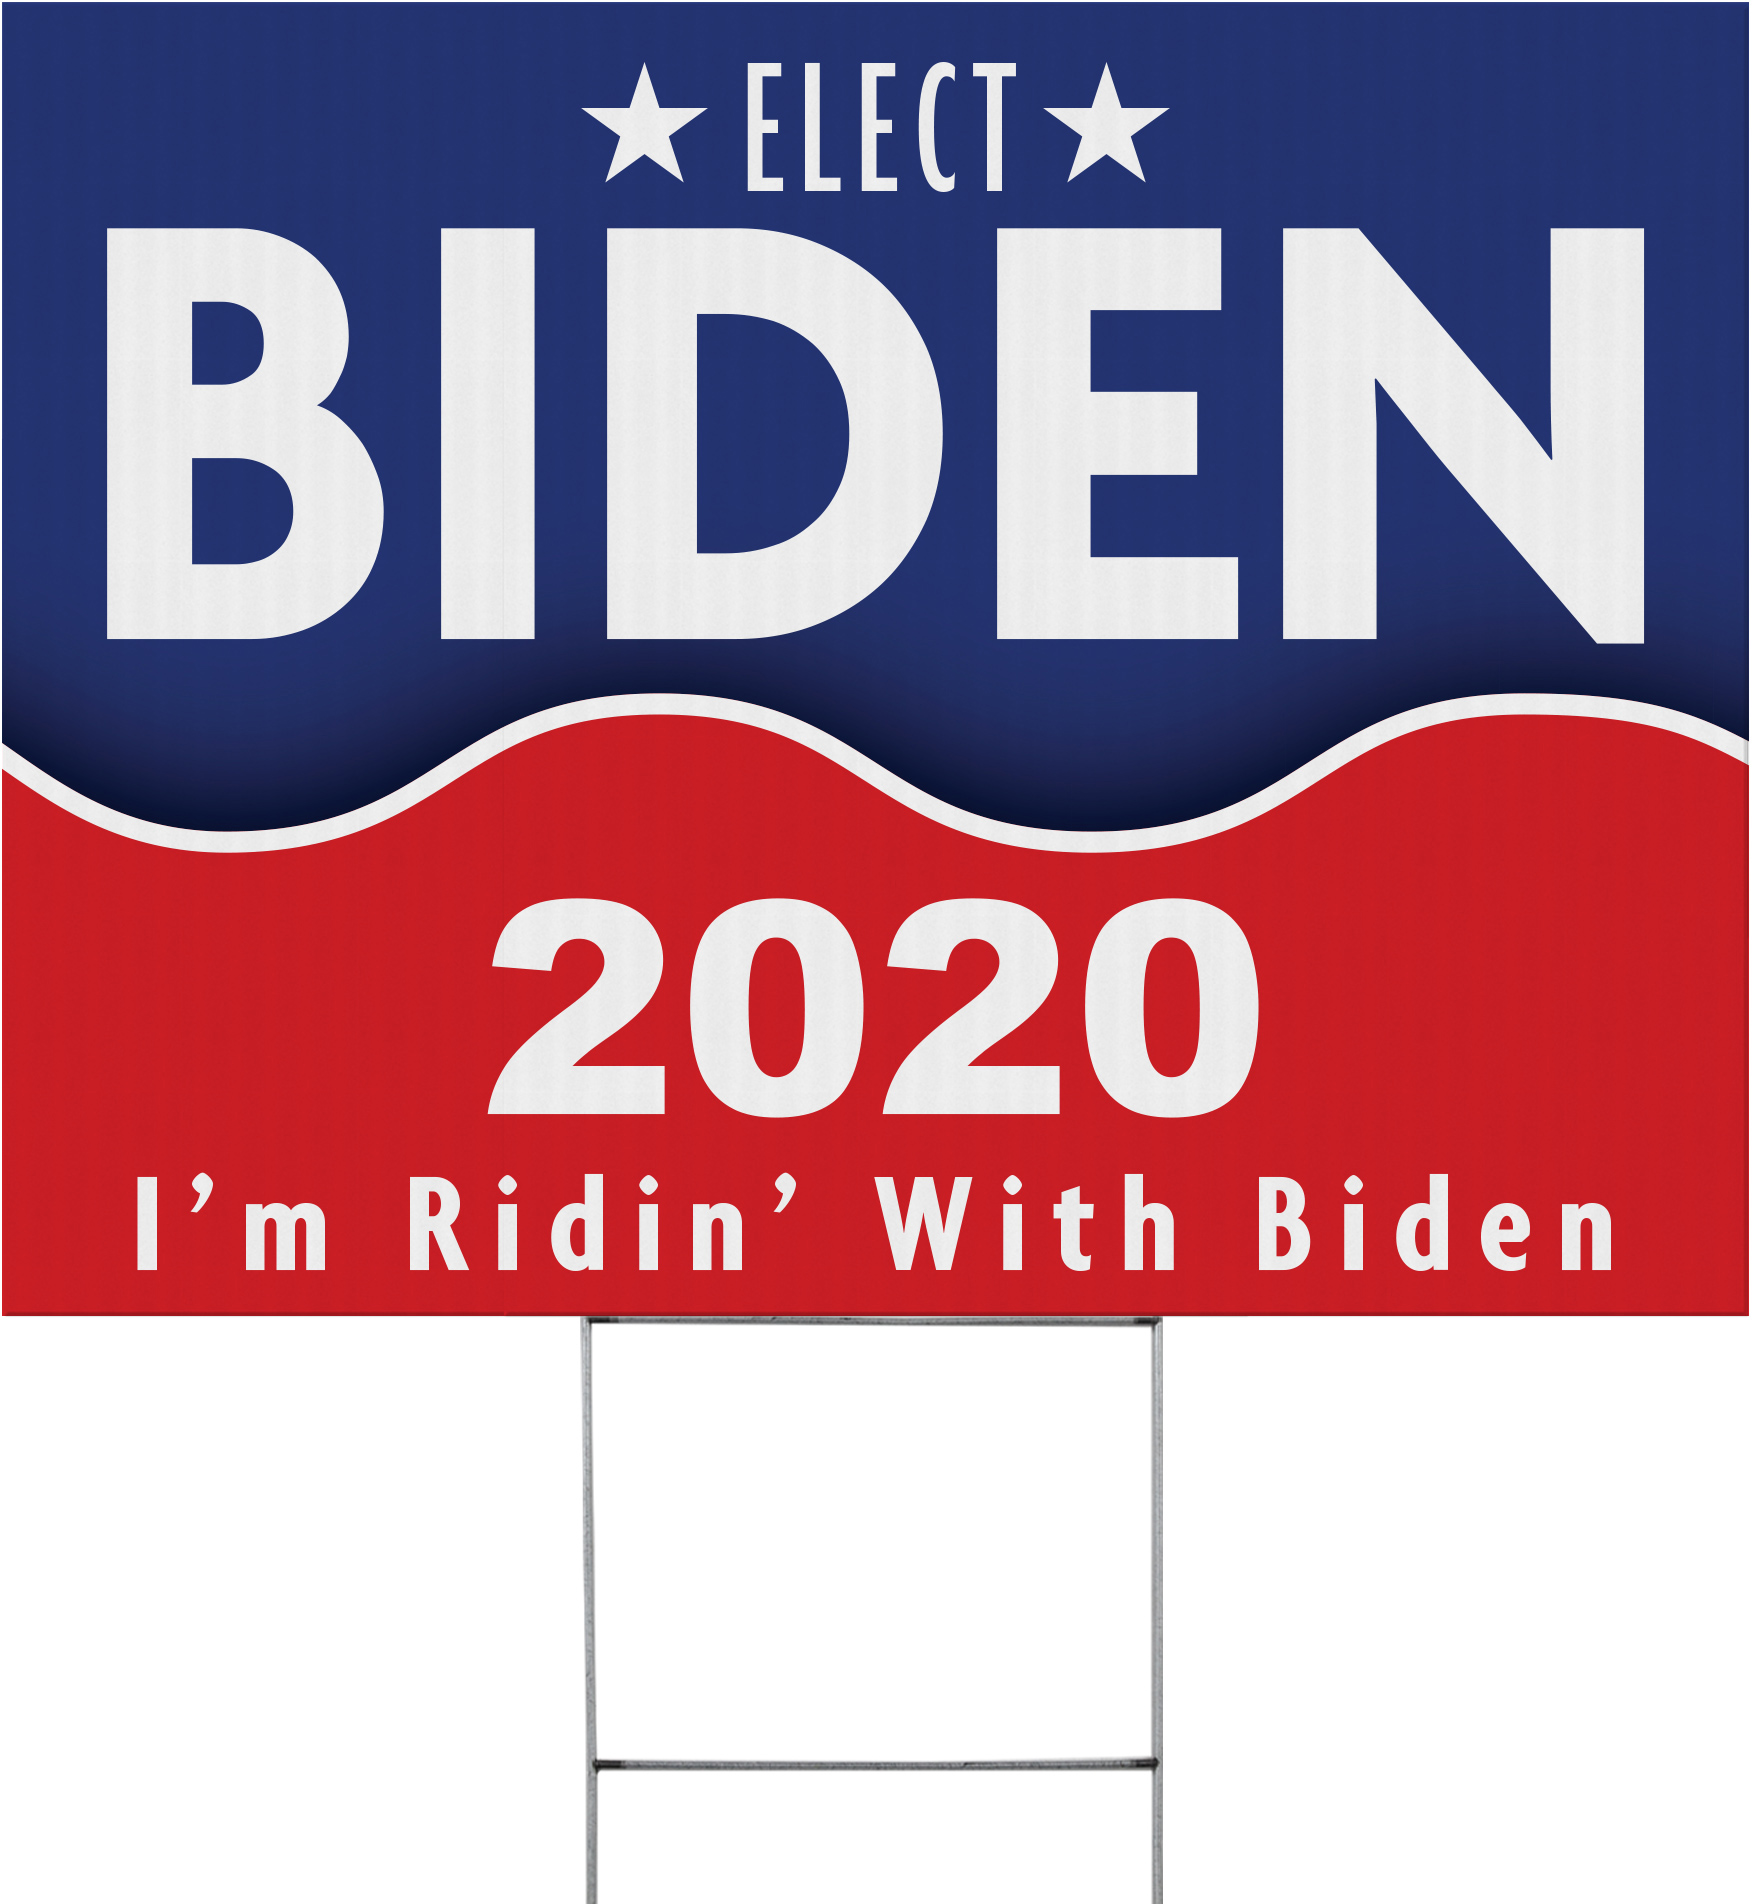 Biden Ridin' with Wave 2020 Political Yard Sign - 24 x 18 inch